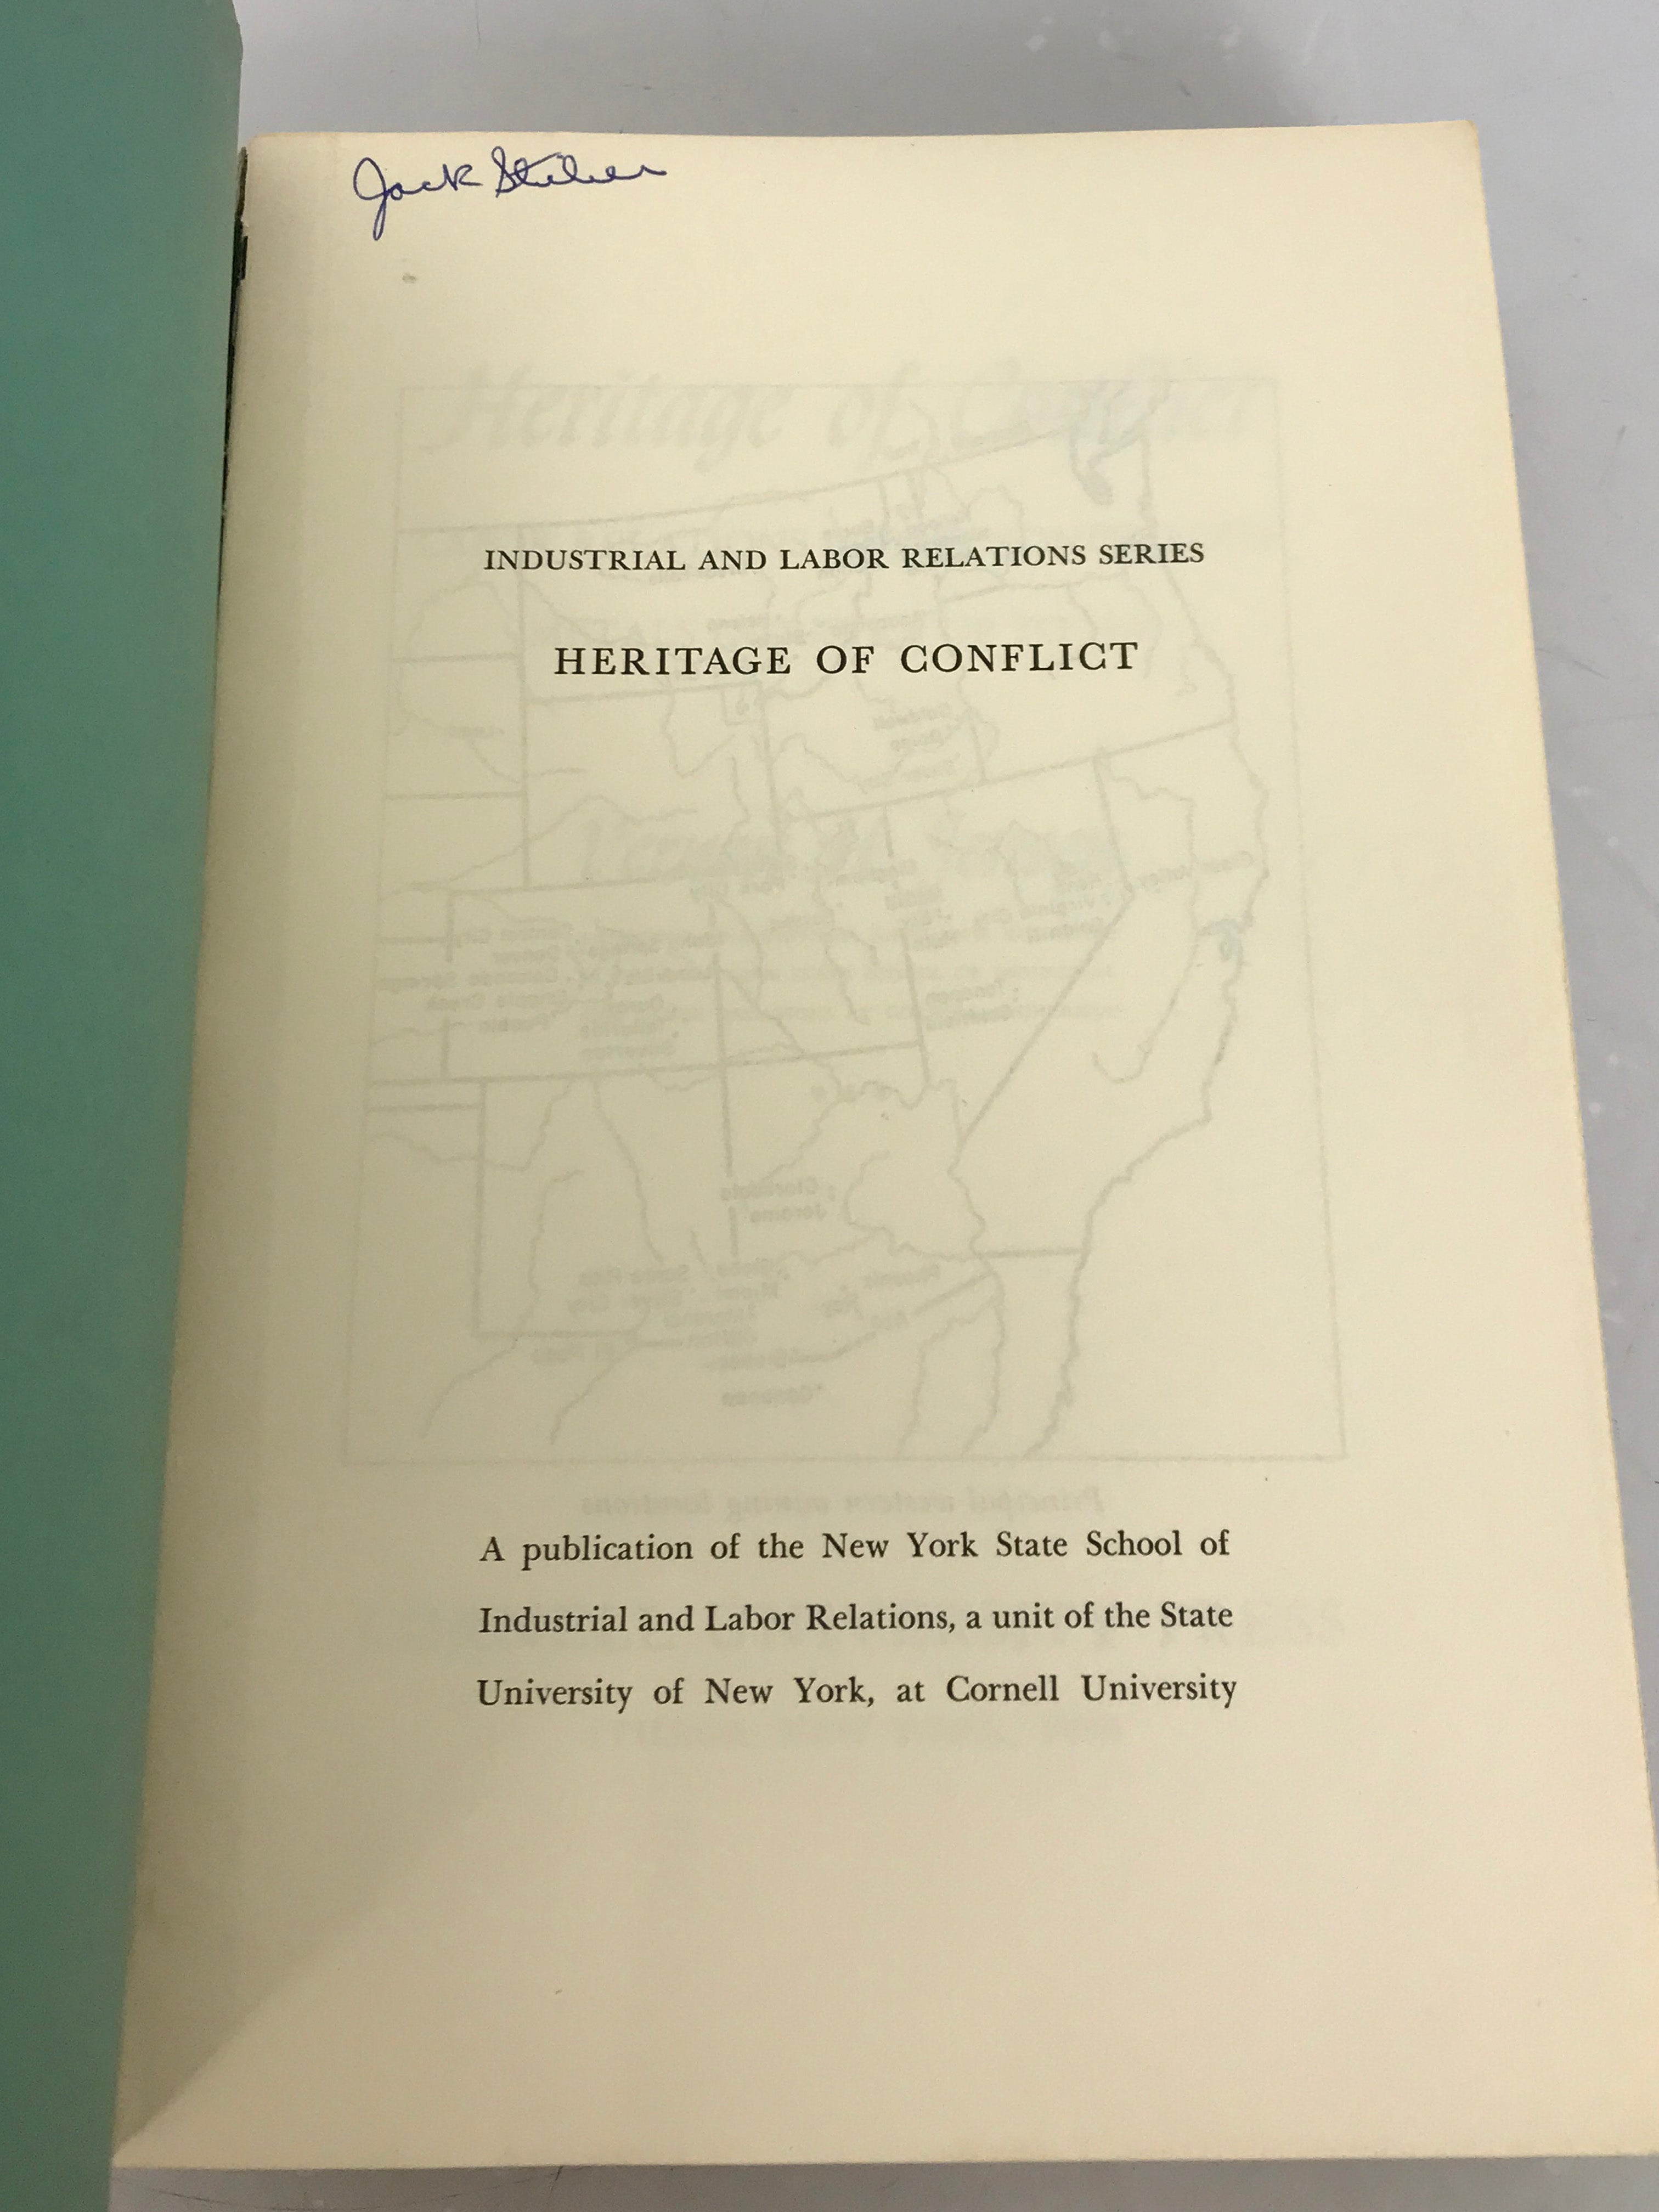 Heritage of Conflict Labor Relations in the Nonferrous Metals Industry Up to 1930 Vernon Jensen 1950 SC